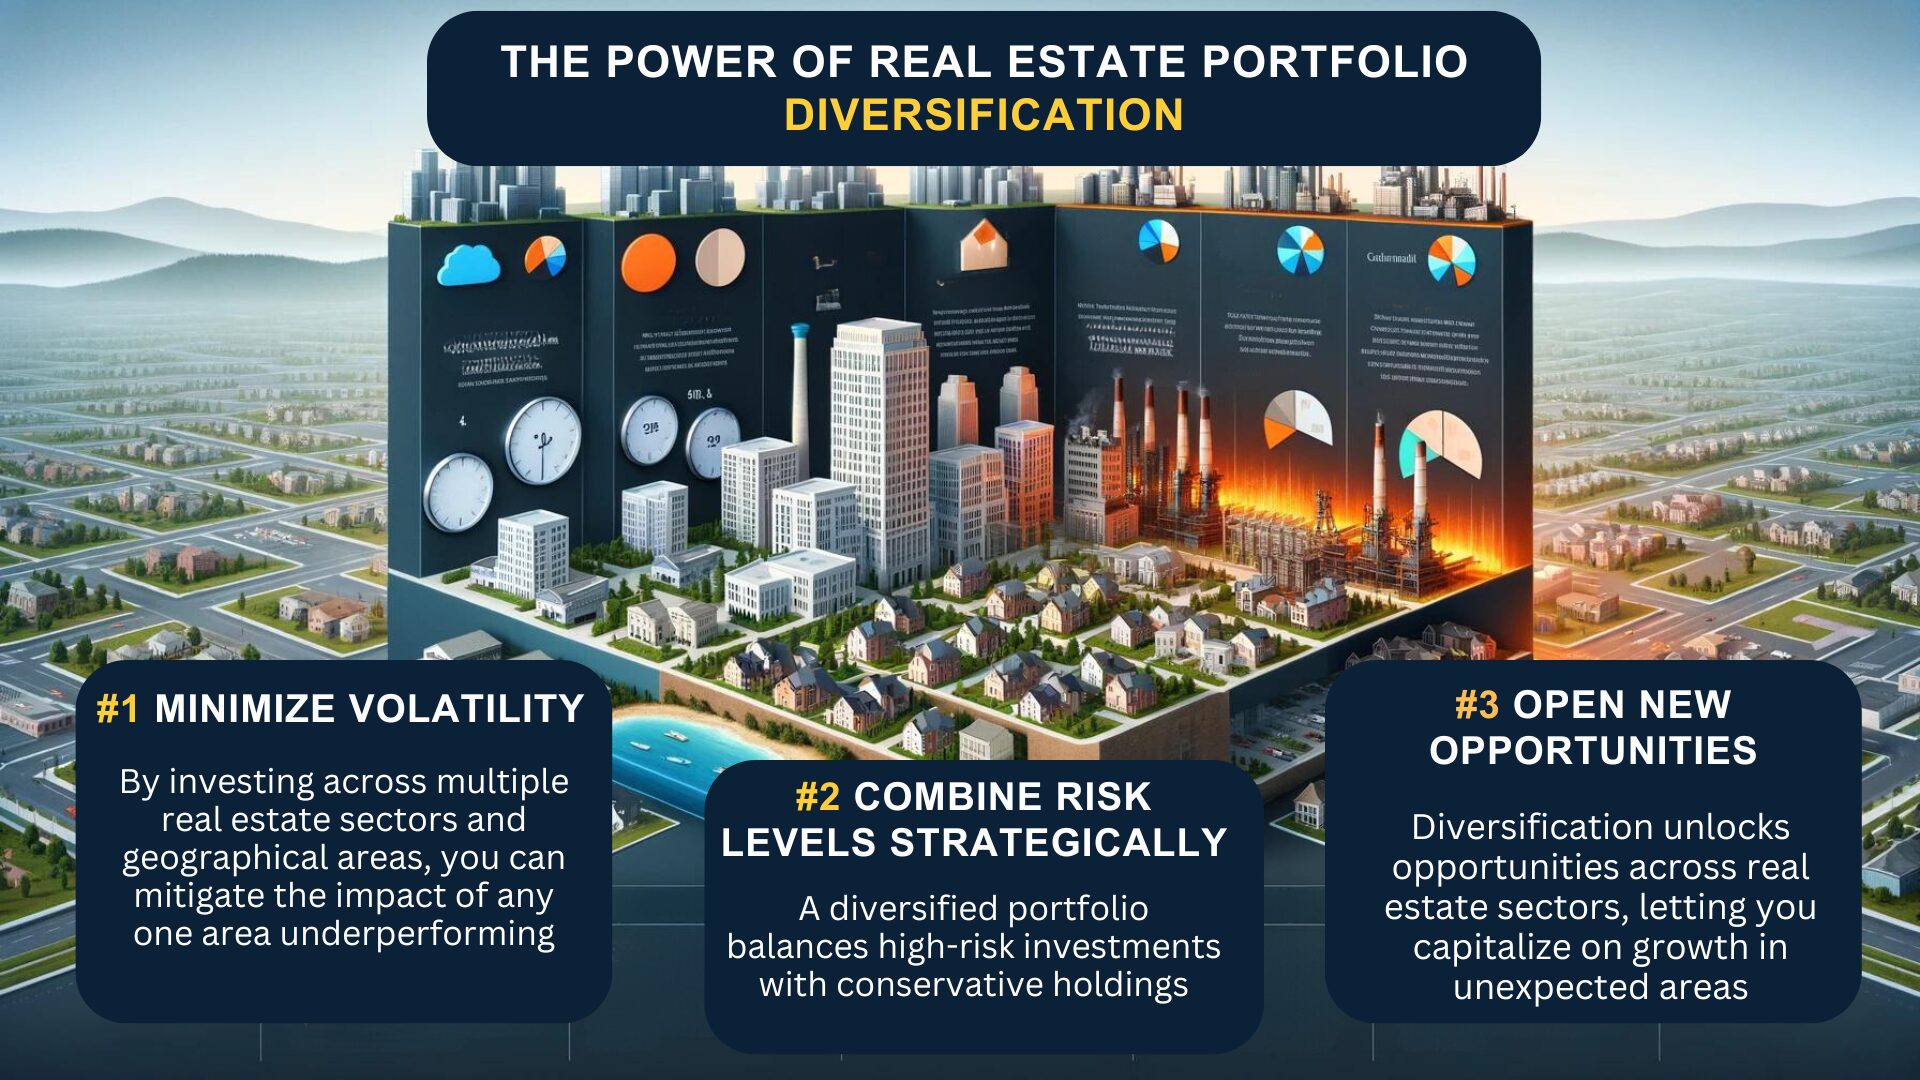 The Power of Real Estate Portfolio Diversification